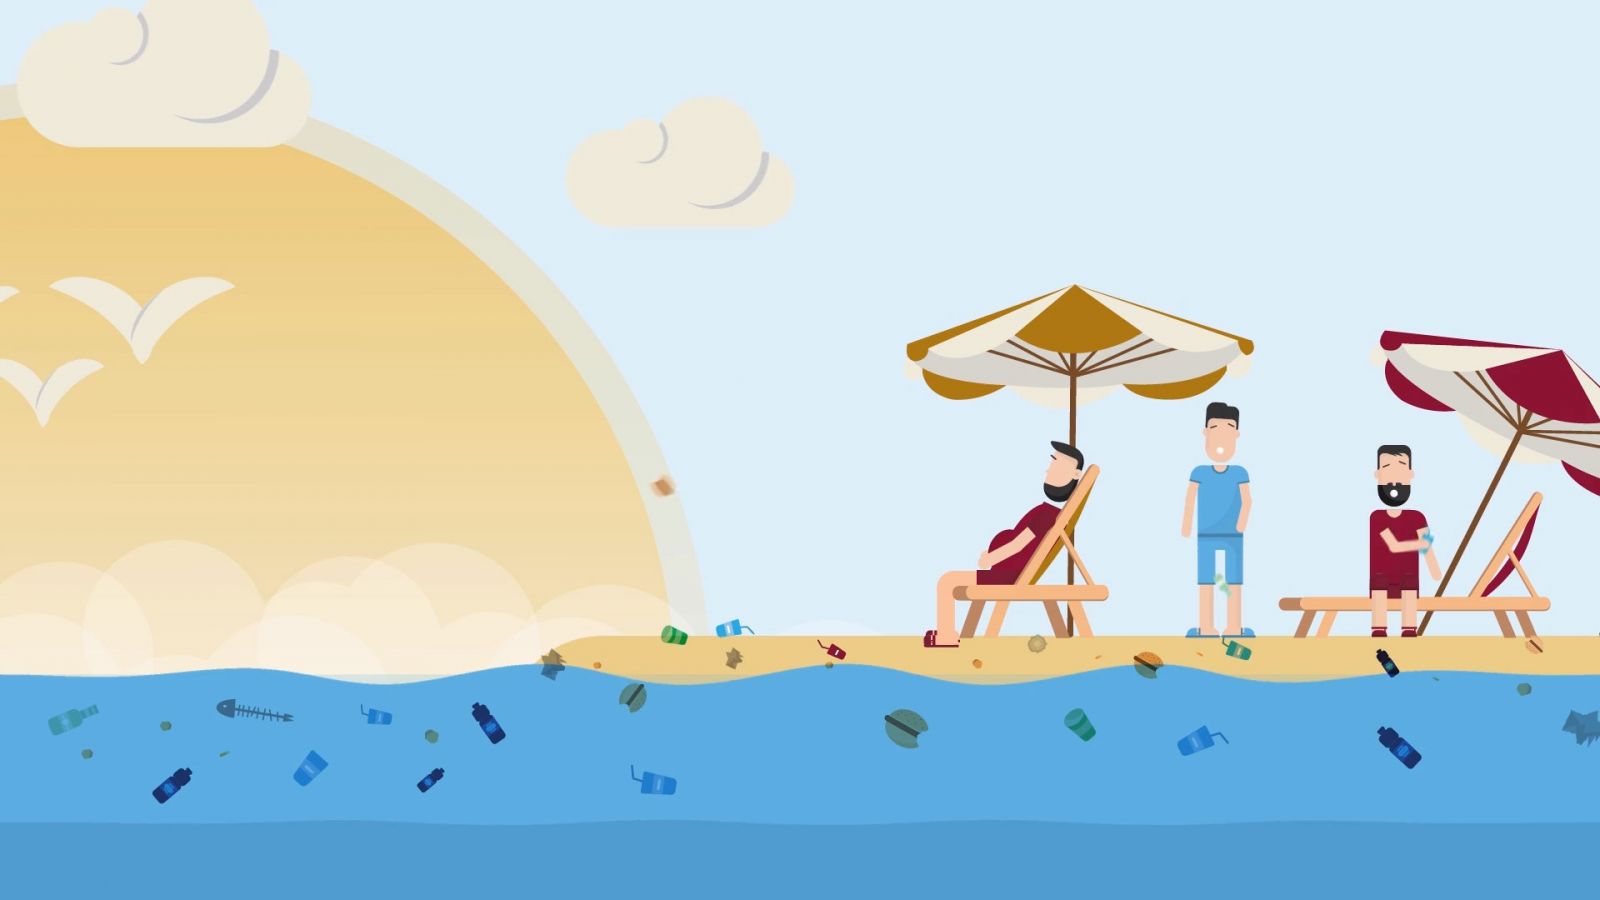 Qatar Charity Beach Campaign - Video Animation